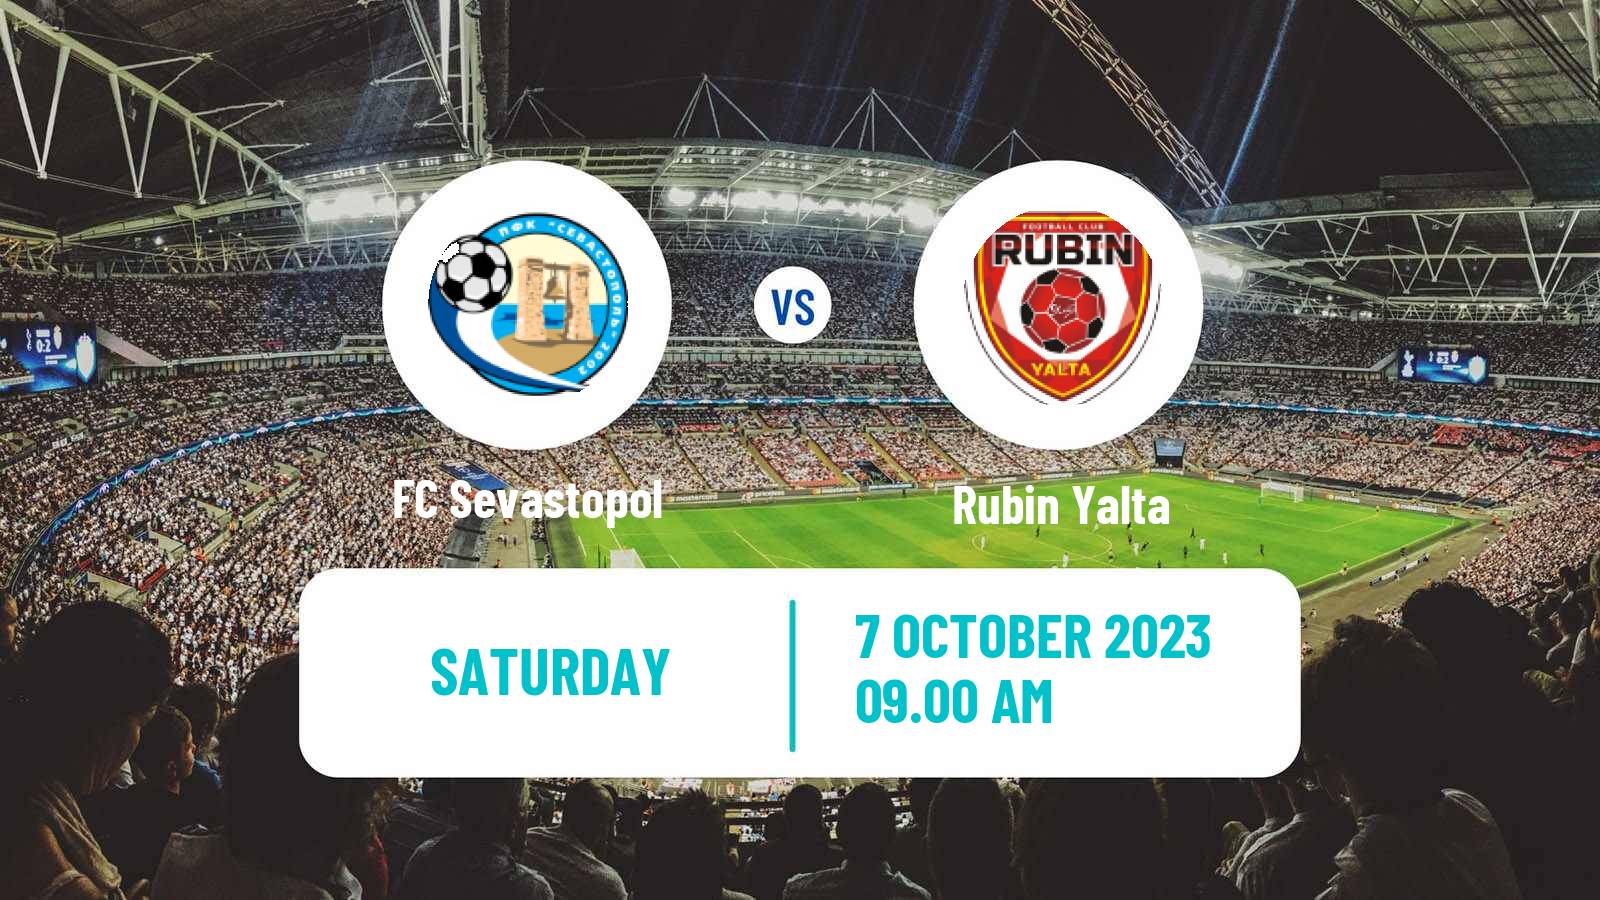 Soccer FNL 2 Division B Group 1 FC Sevastopol - Rubin Yalta